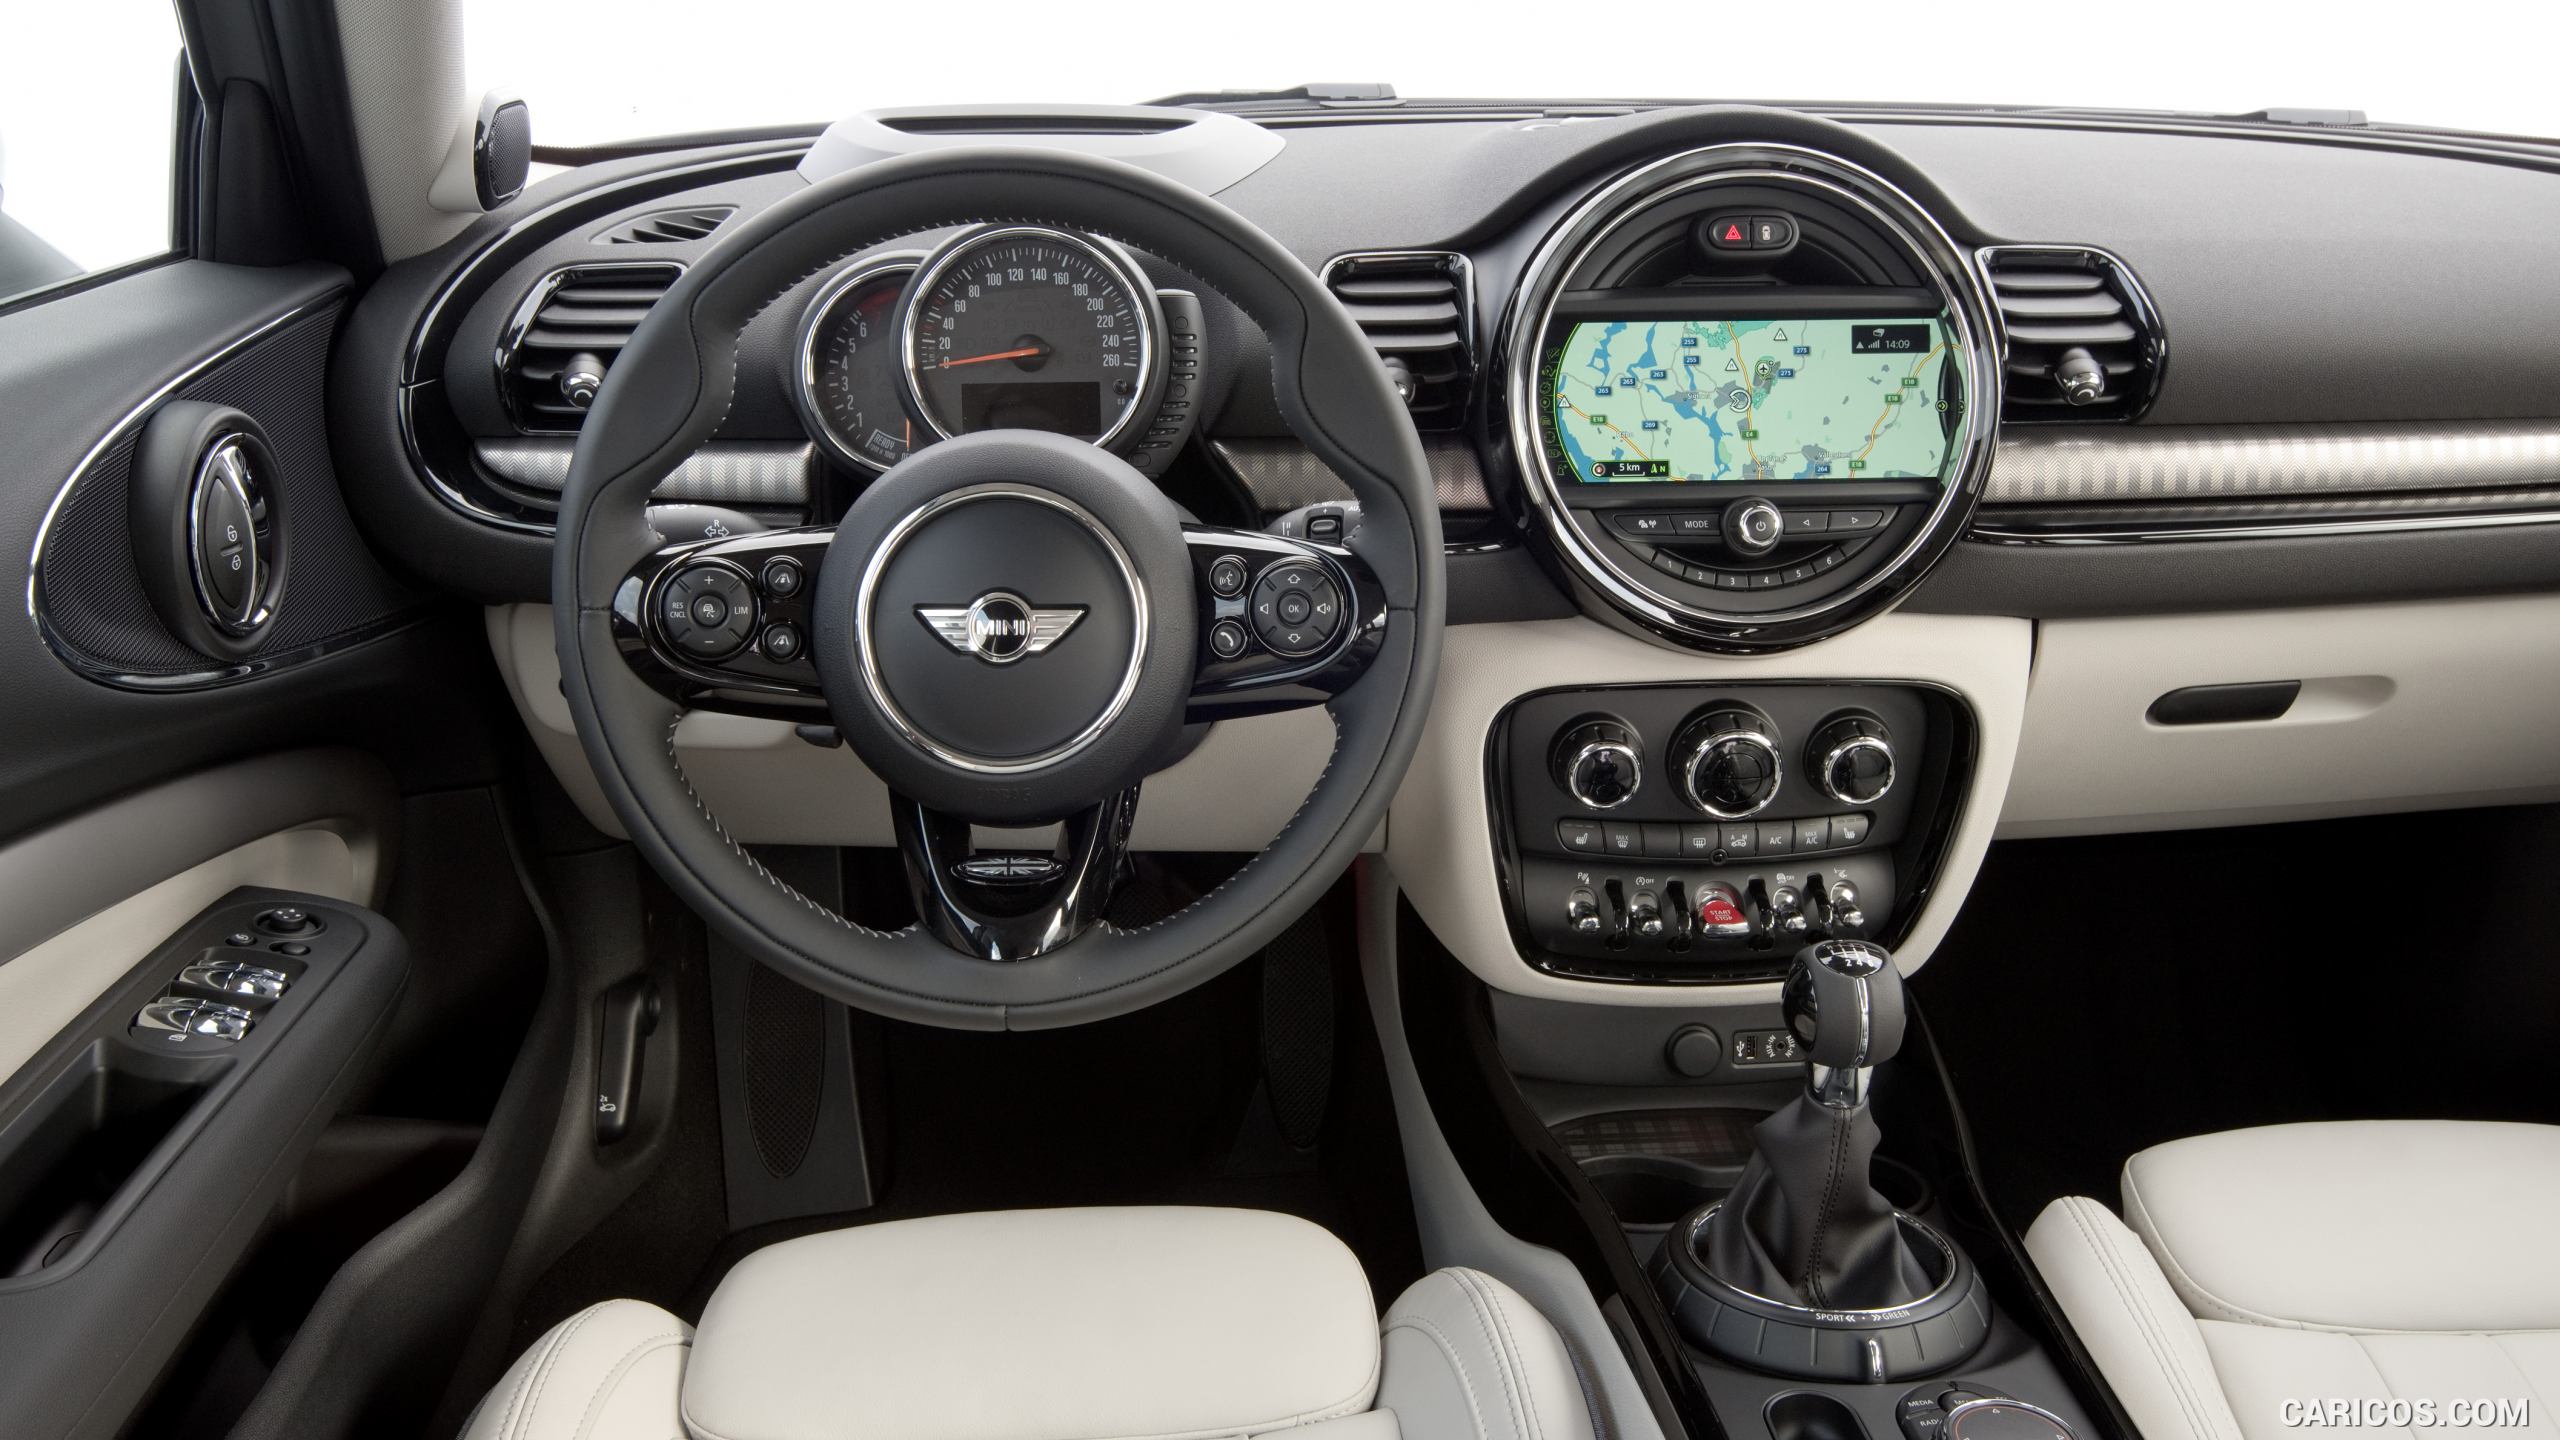 2016 MINI Cooper S Clubman in Metallic Melting Silver - Interior, Cockpit, #234 of 380